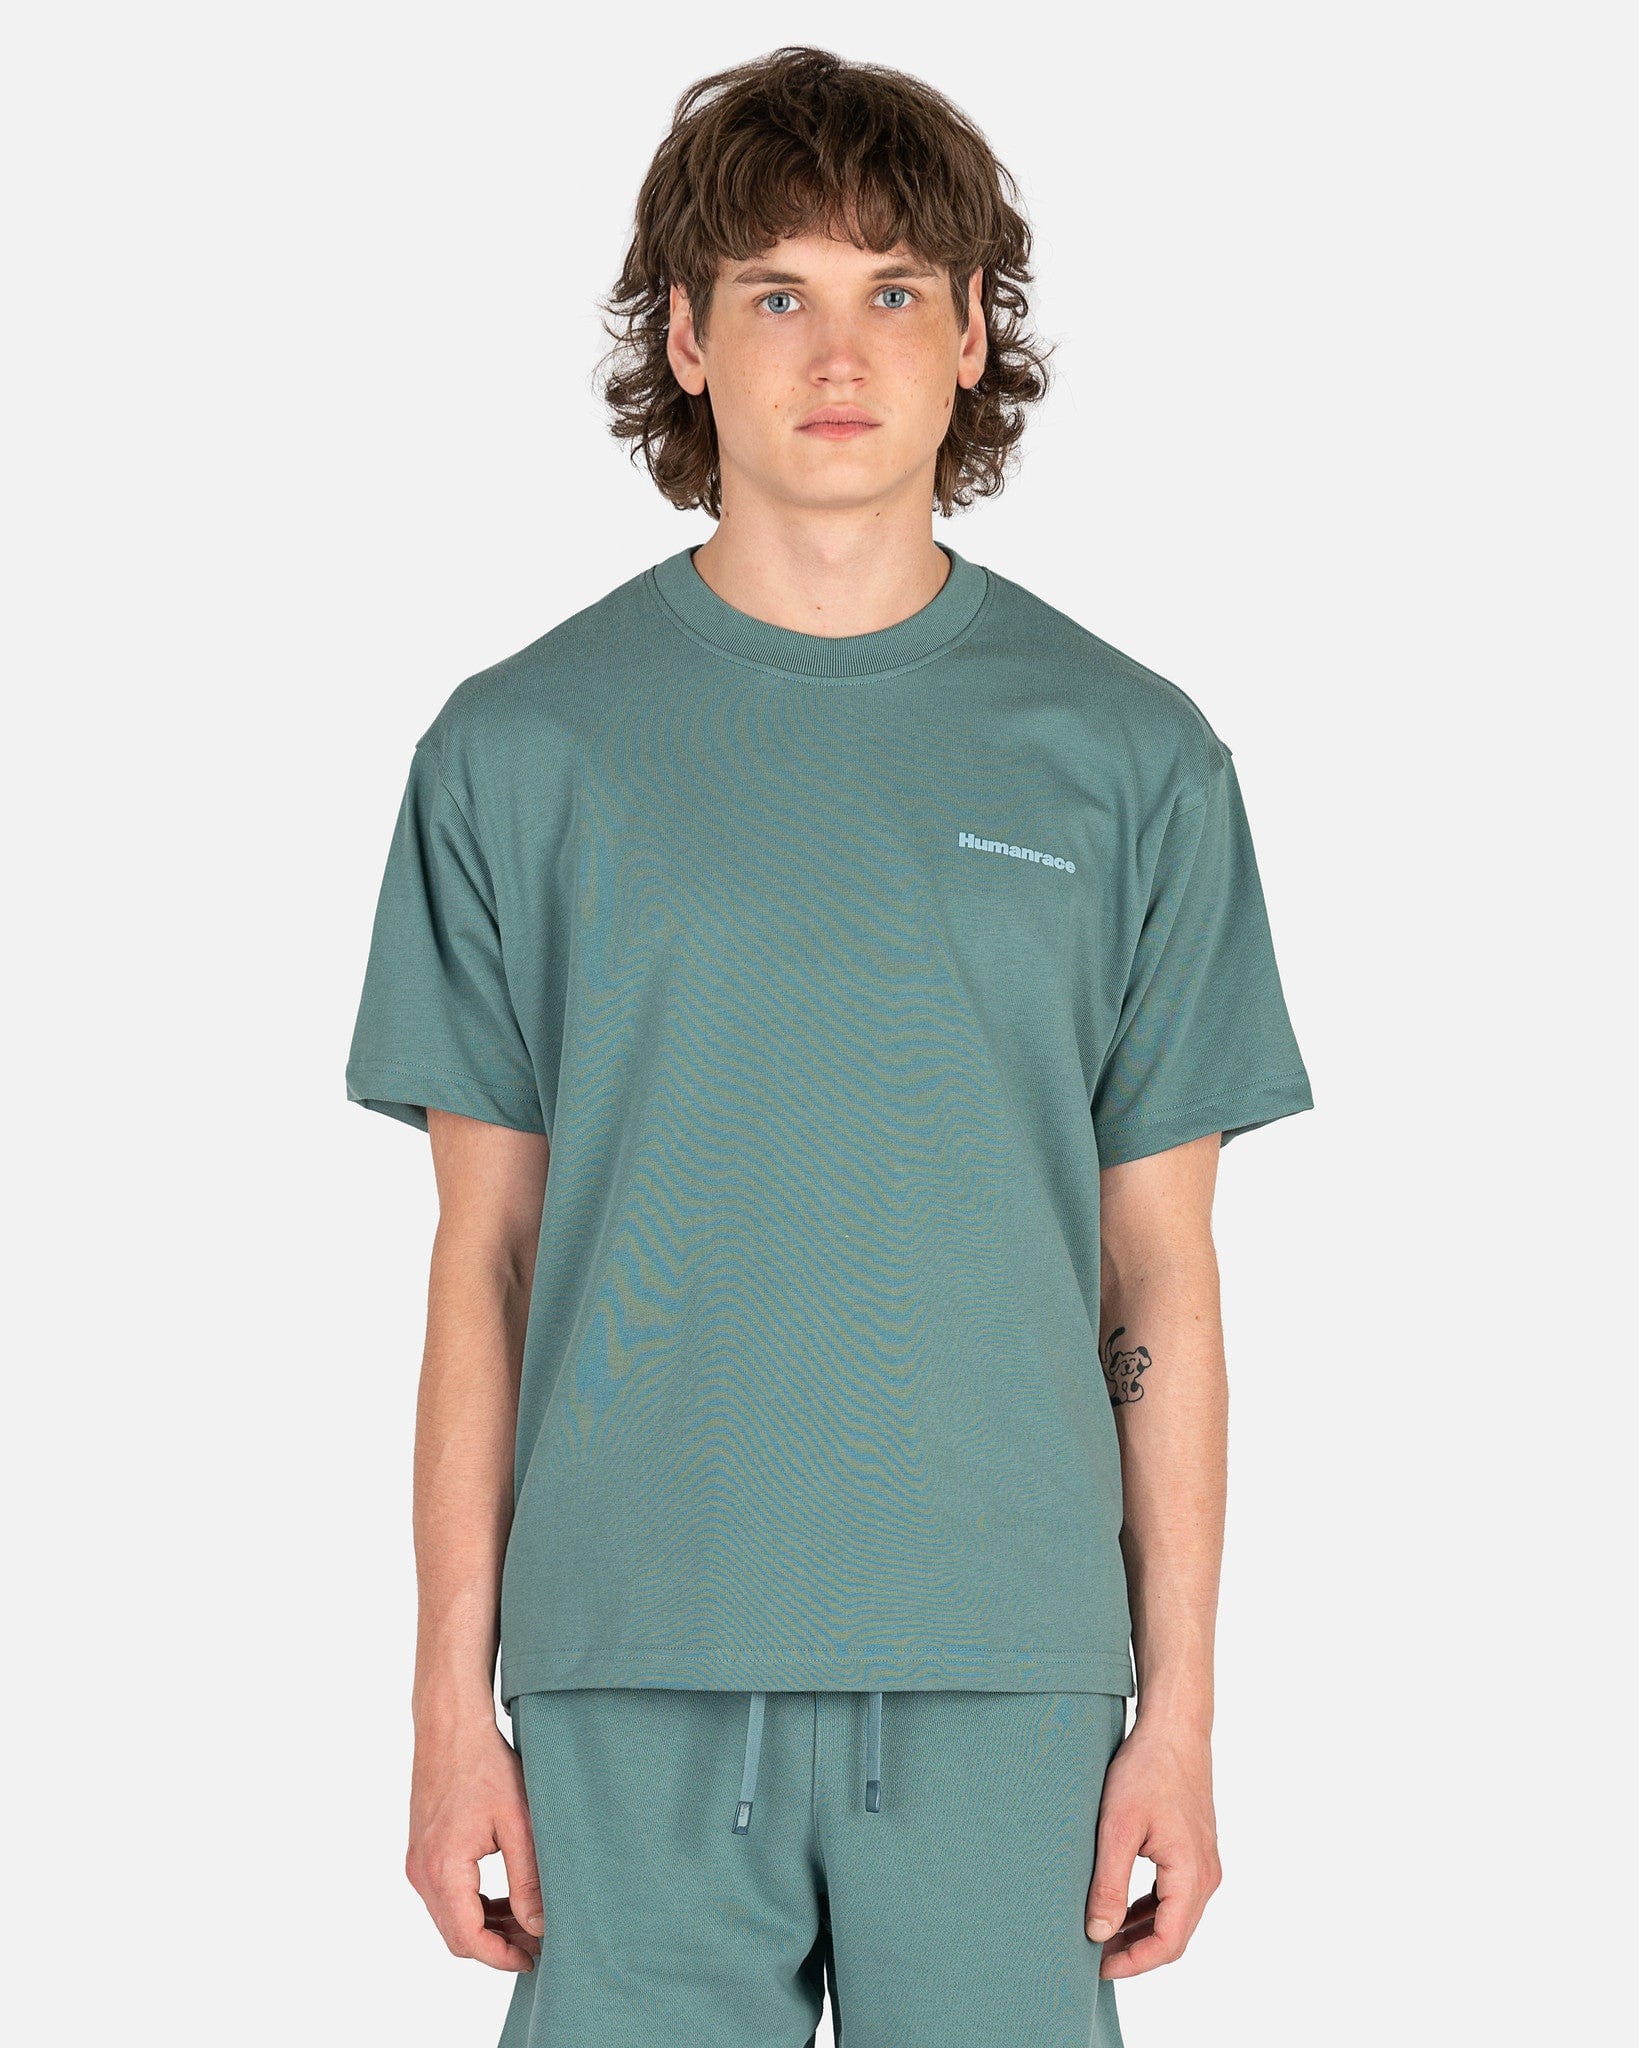 Adidas Men's Shorts Human Race Basic Tee in Hazy Emerald